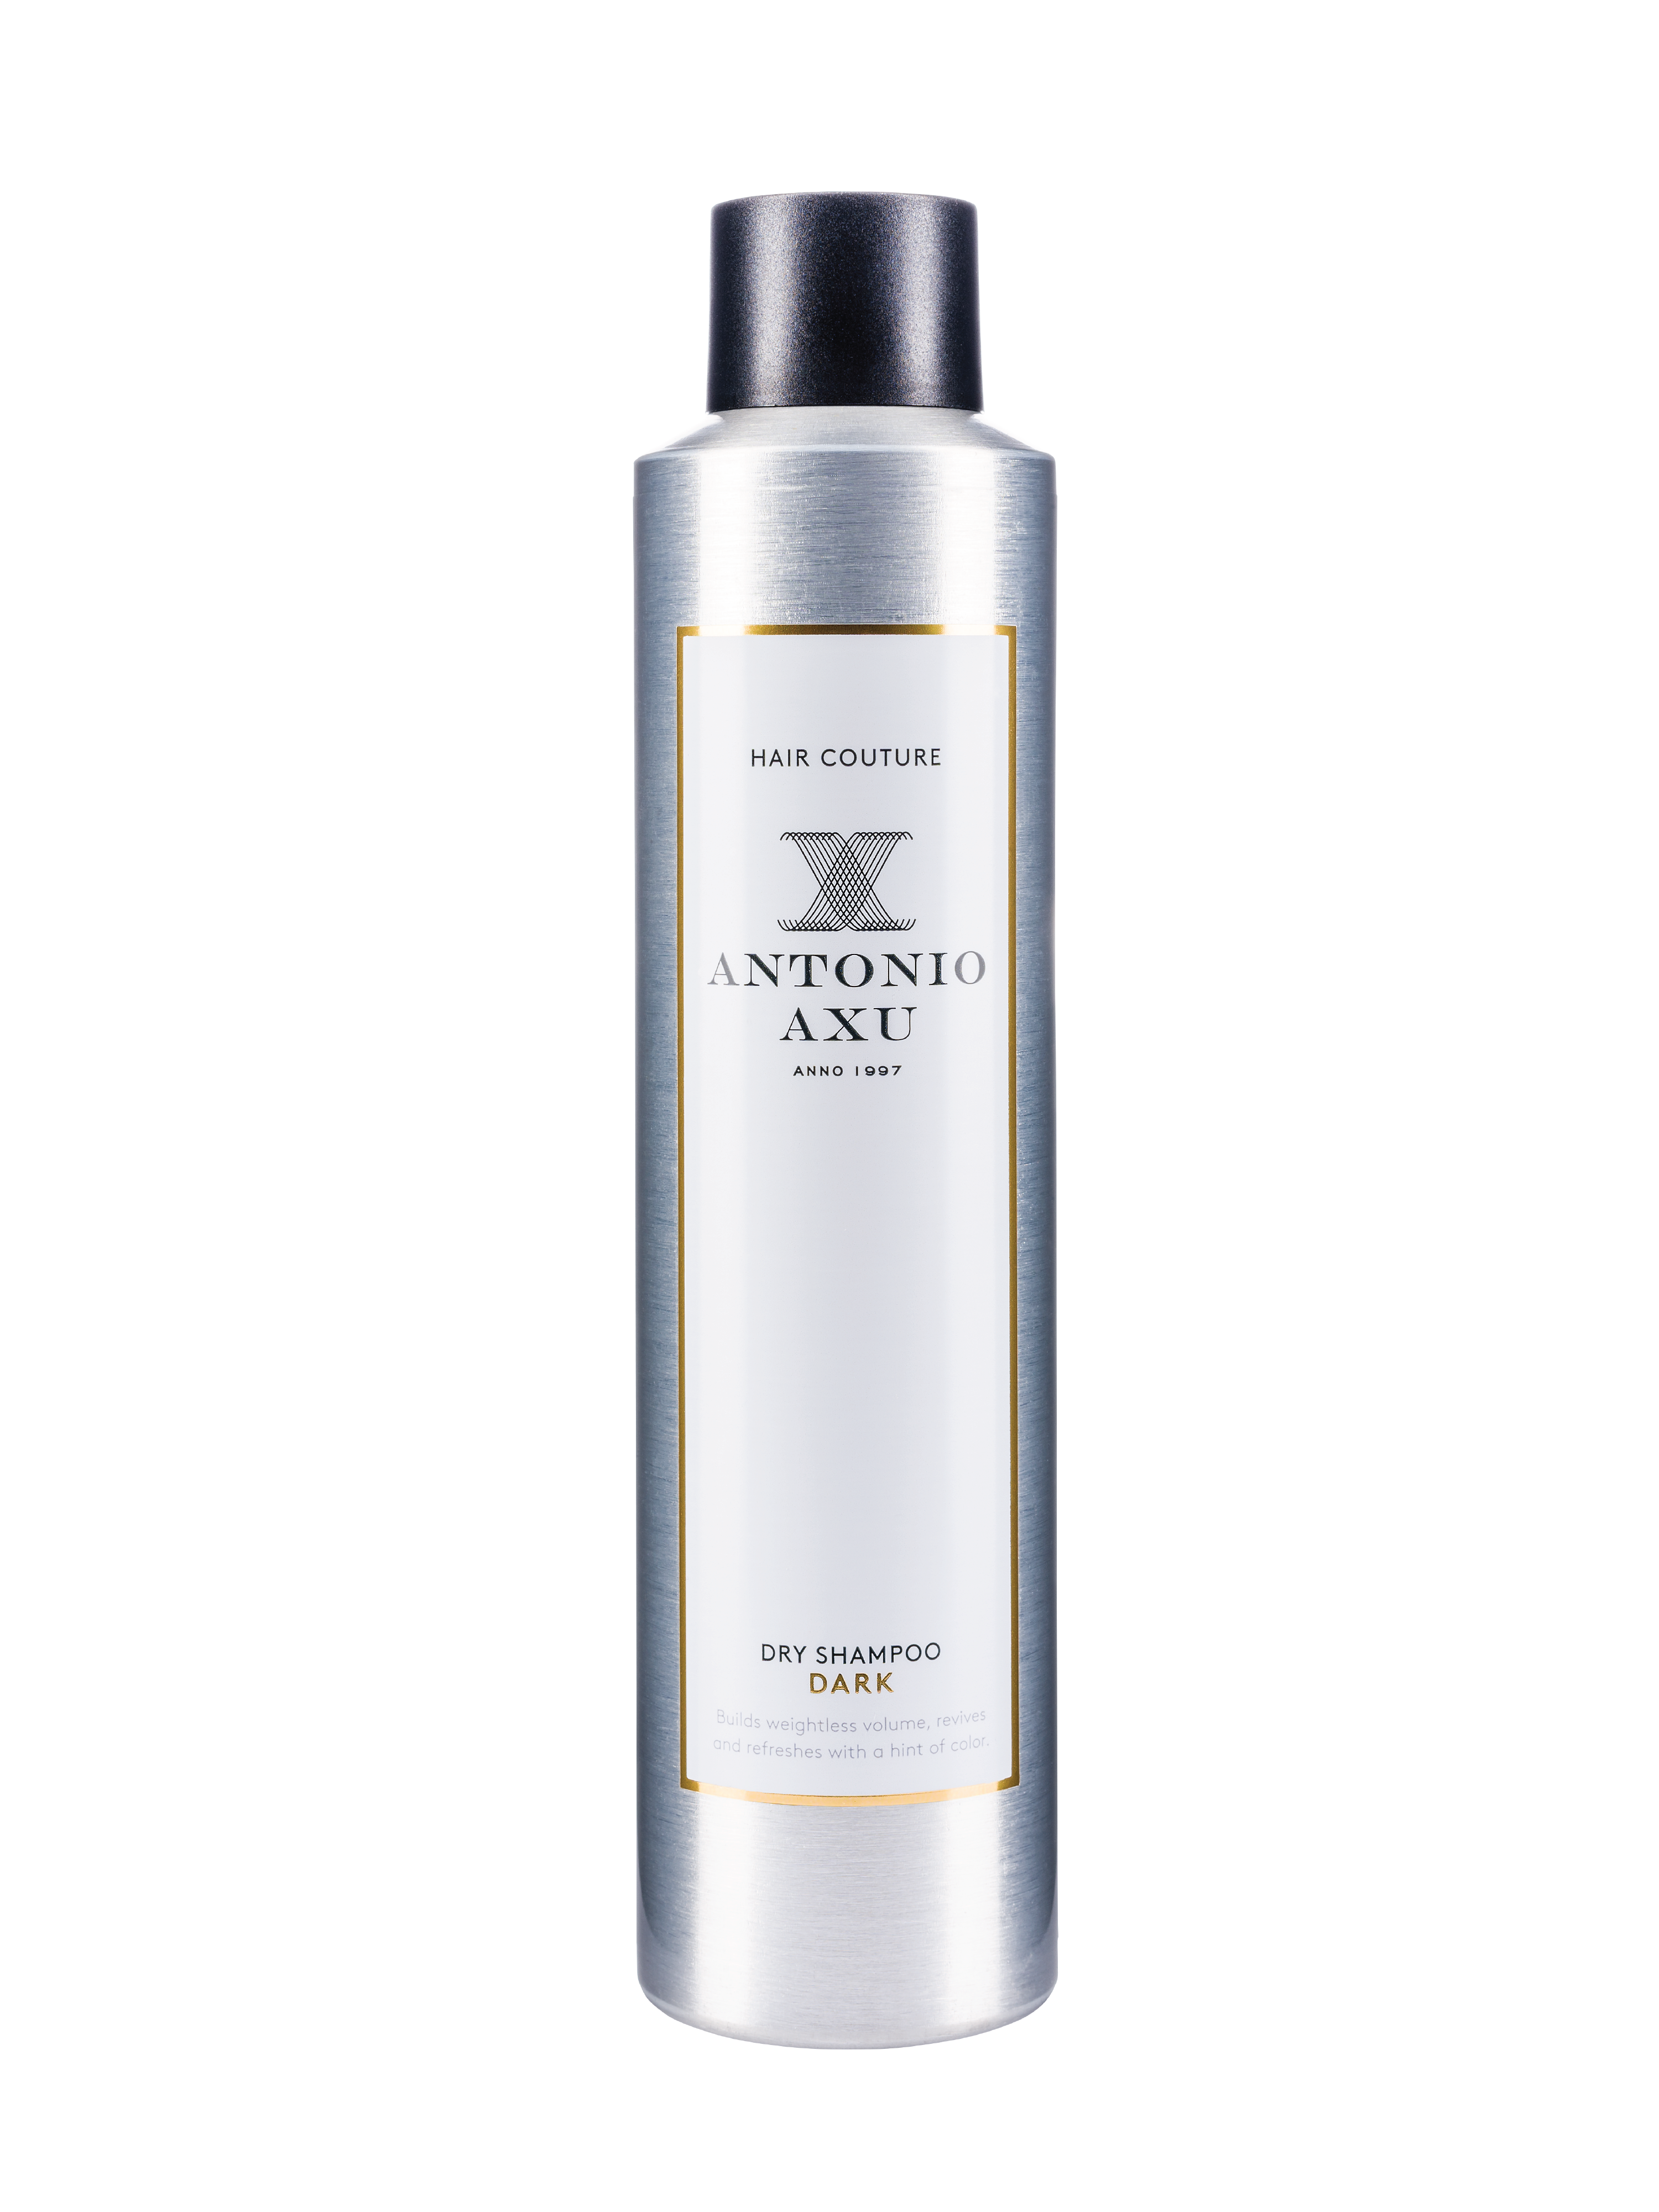 Antonio Axu Dry Shampoo Dark, 300 ml